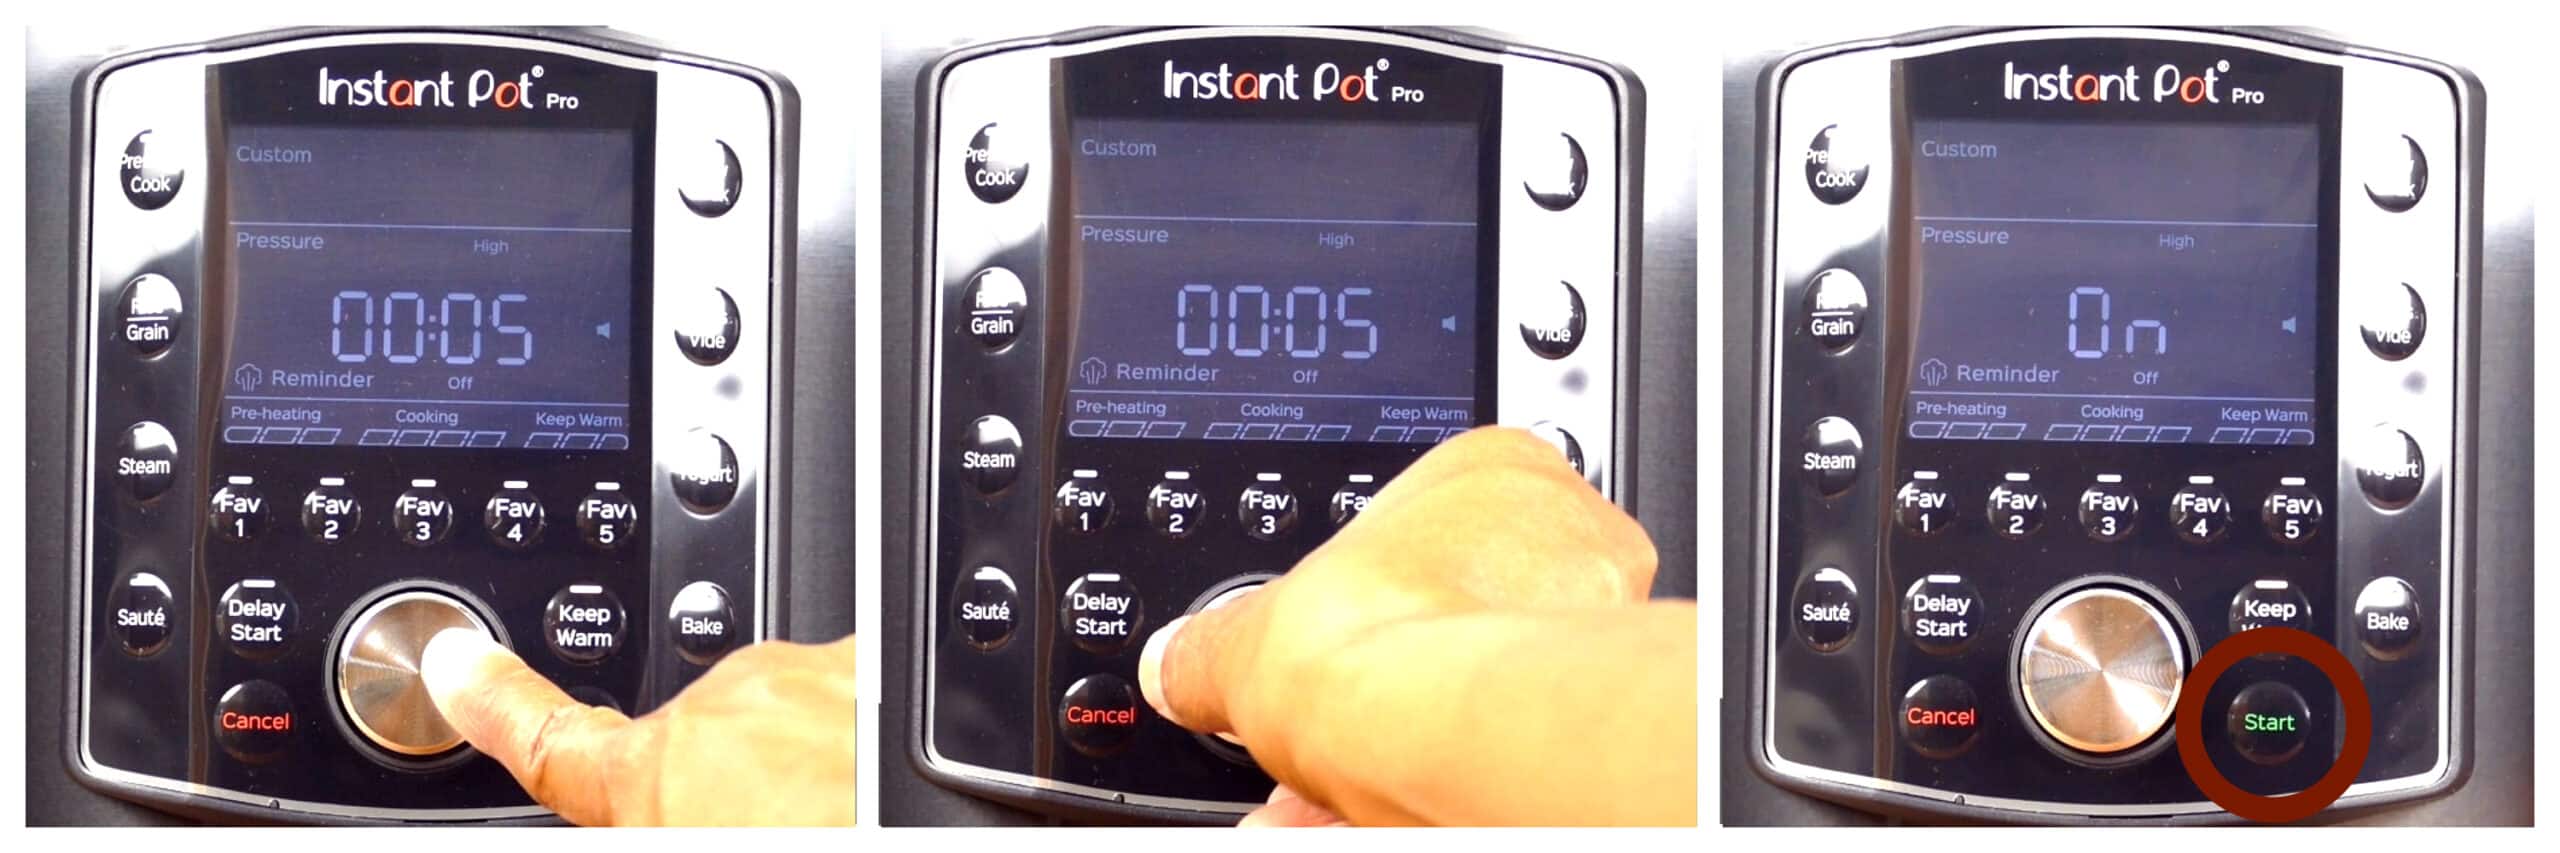 Instant Pot pro pressure cook collage - press knob, turn knob to 00:05, start button